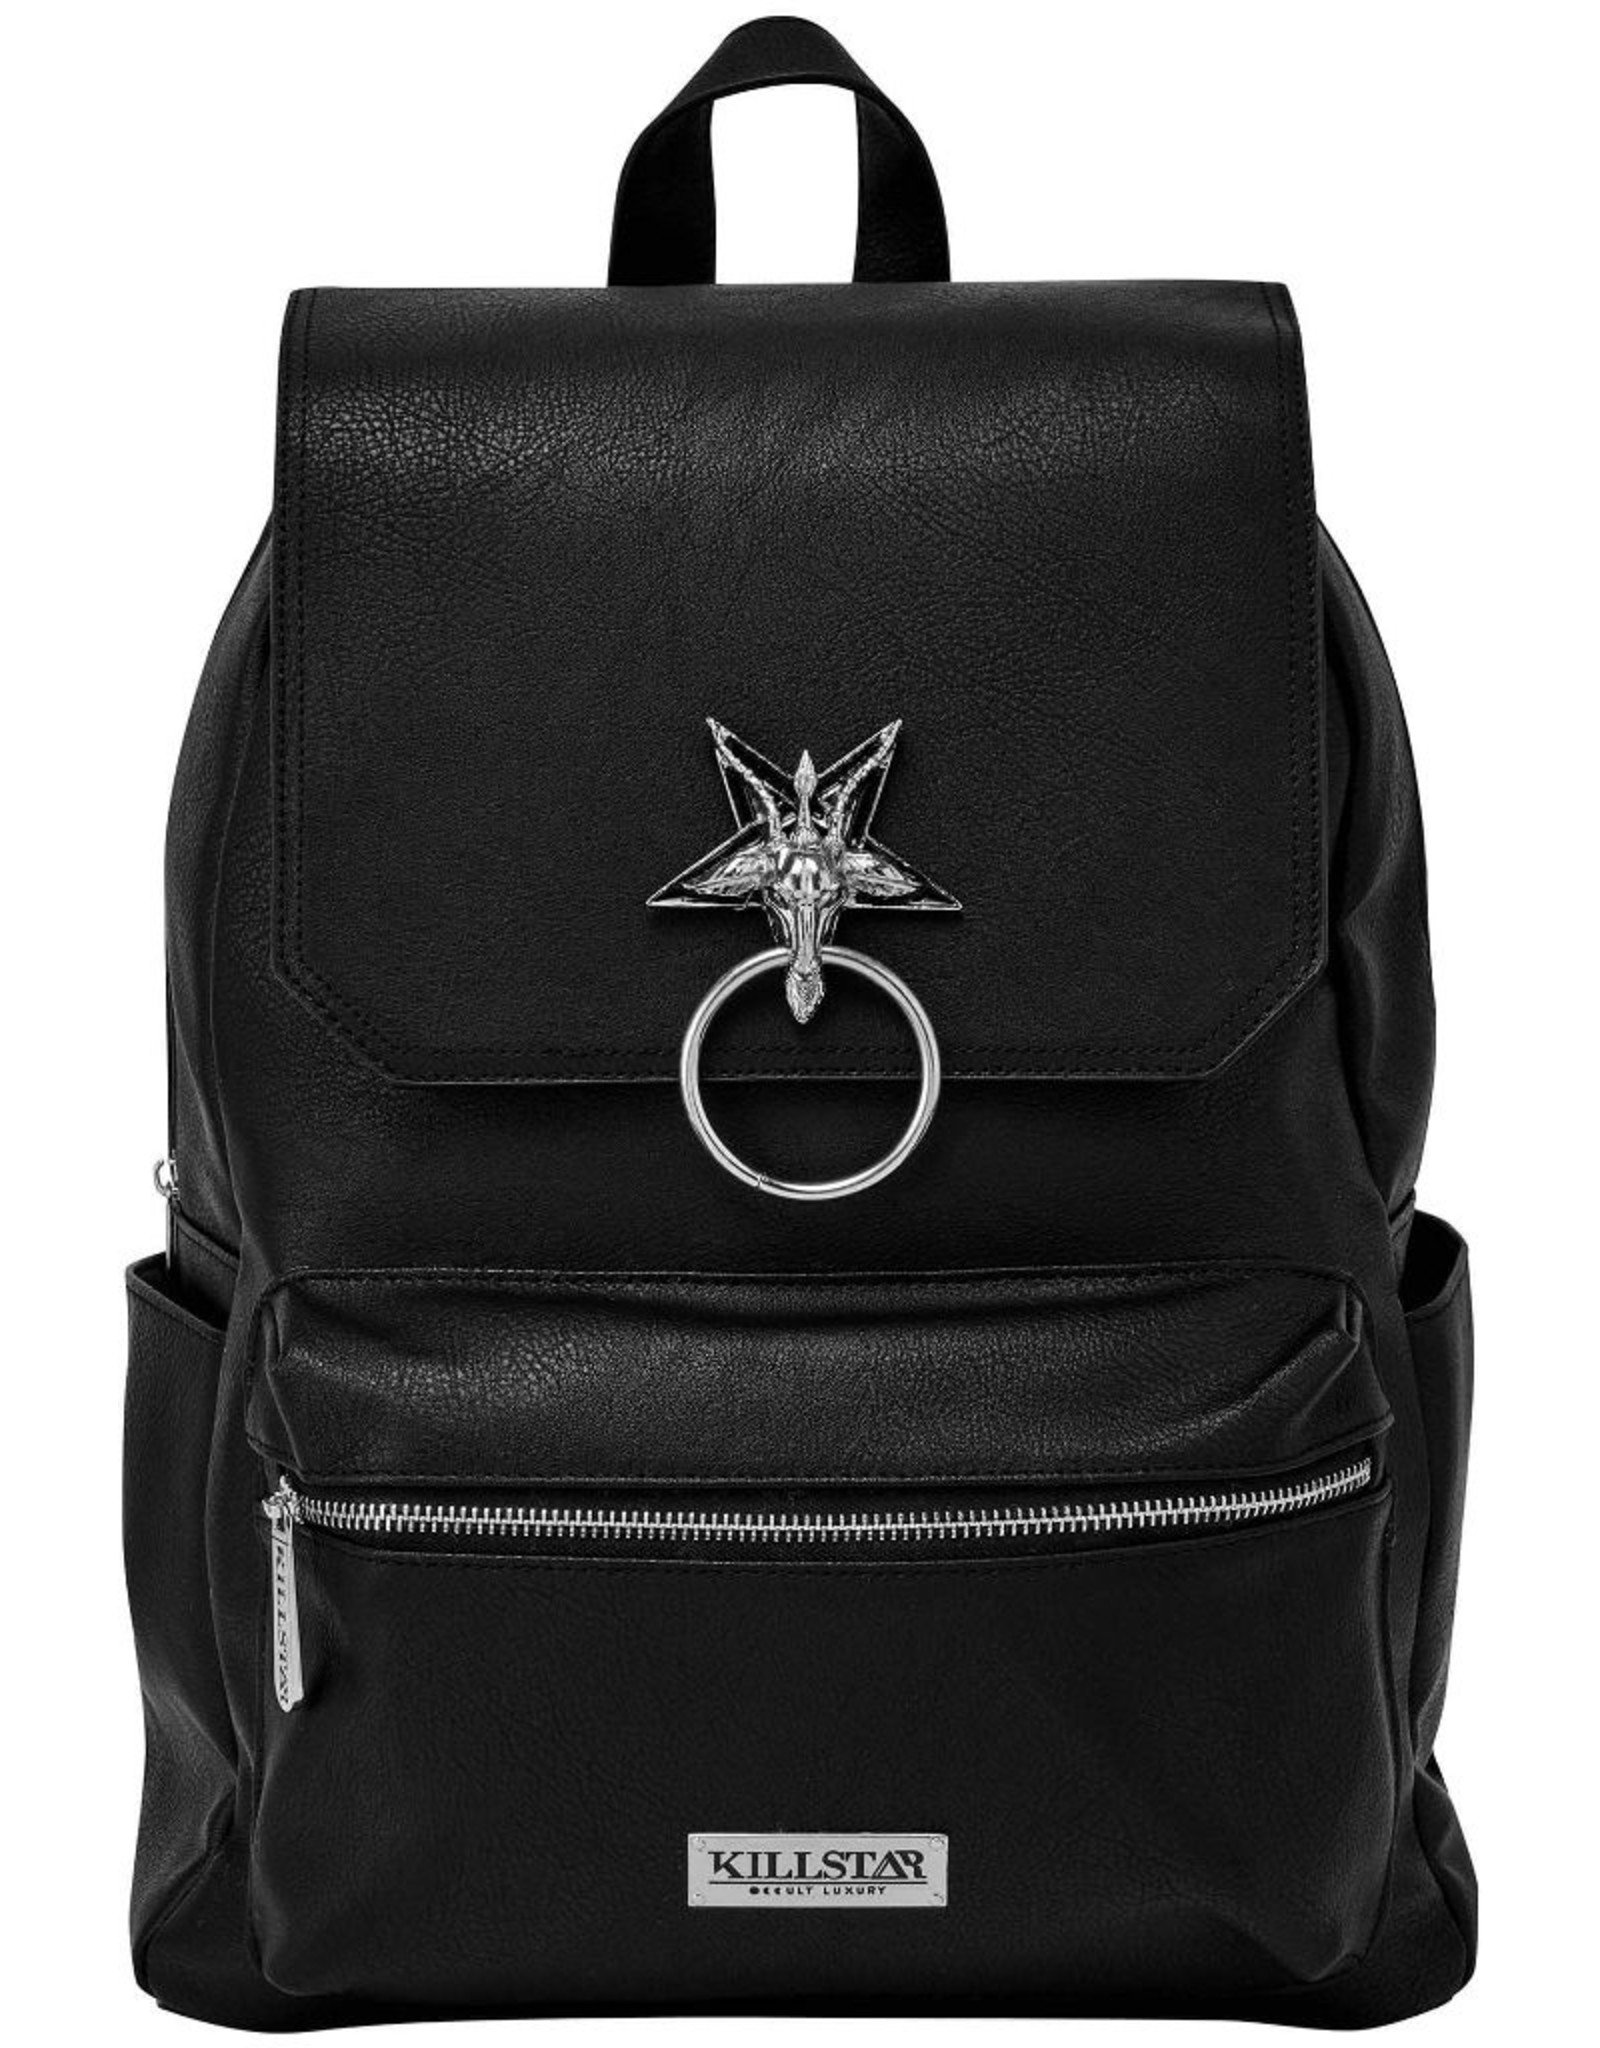 Killstar Killstar bags and accessories - Killstar Baphomet backpack Brimstone